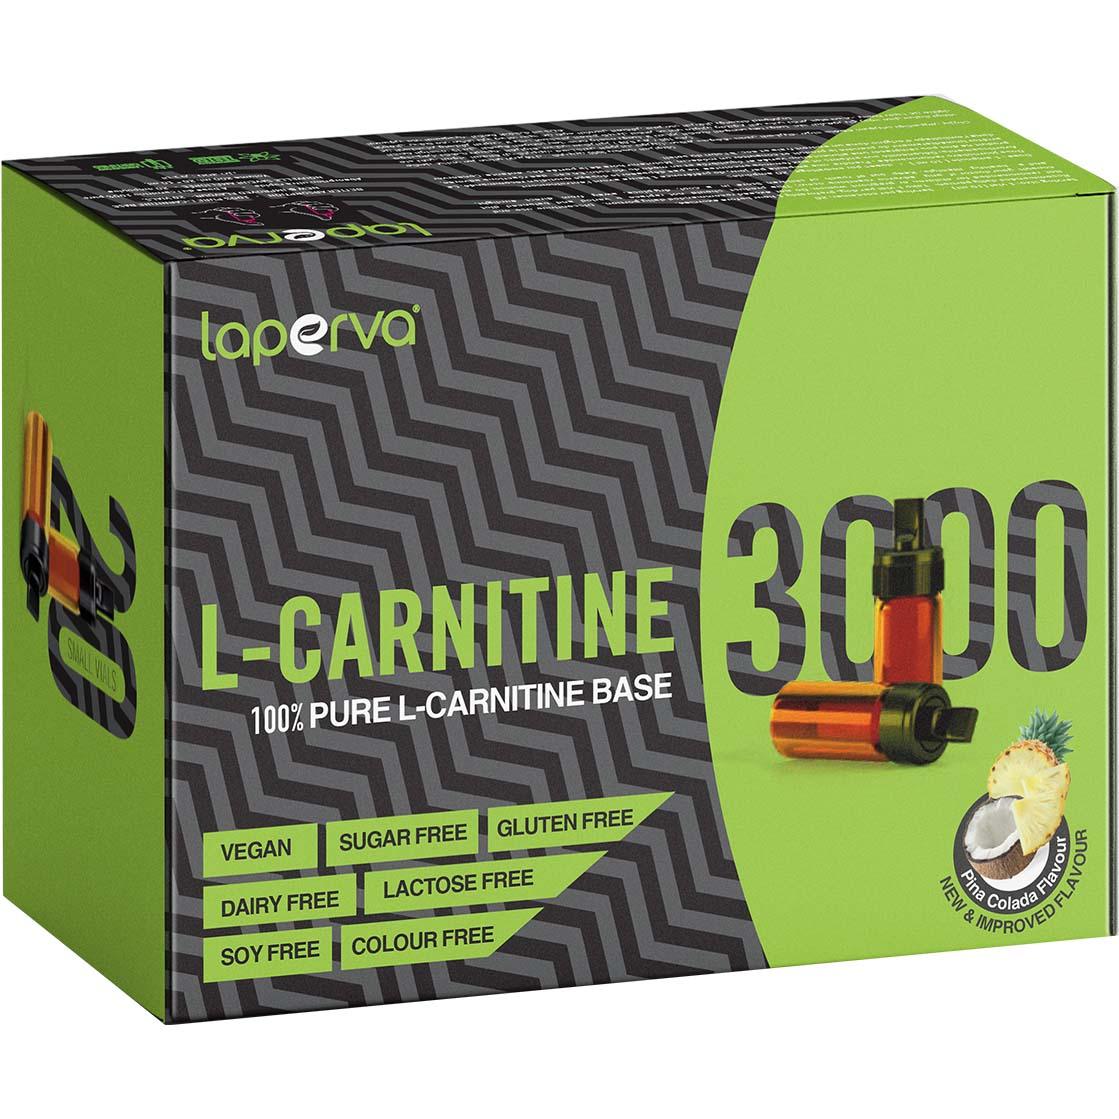 Laperva L Carnitine 3000, 20 Vials - Wellness Shoppee